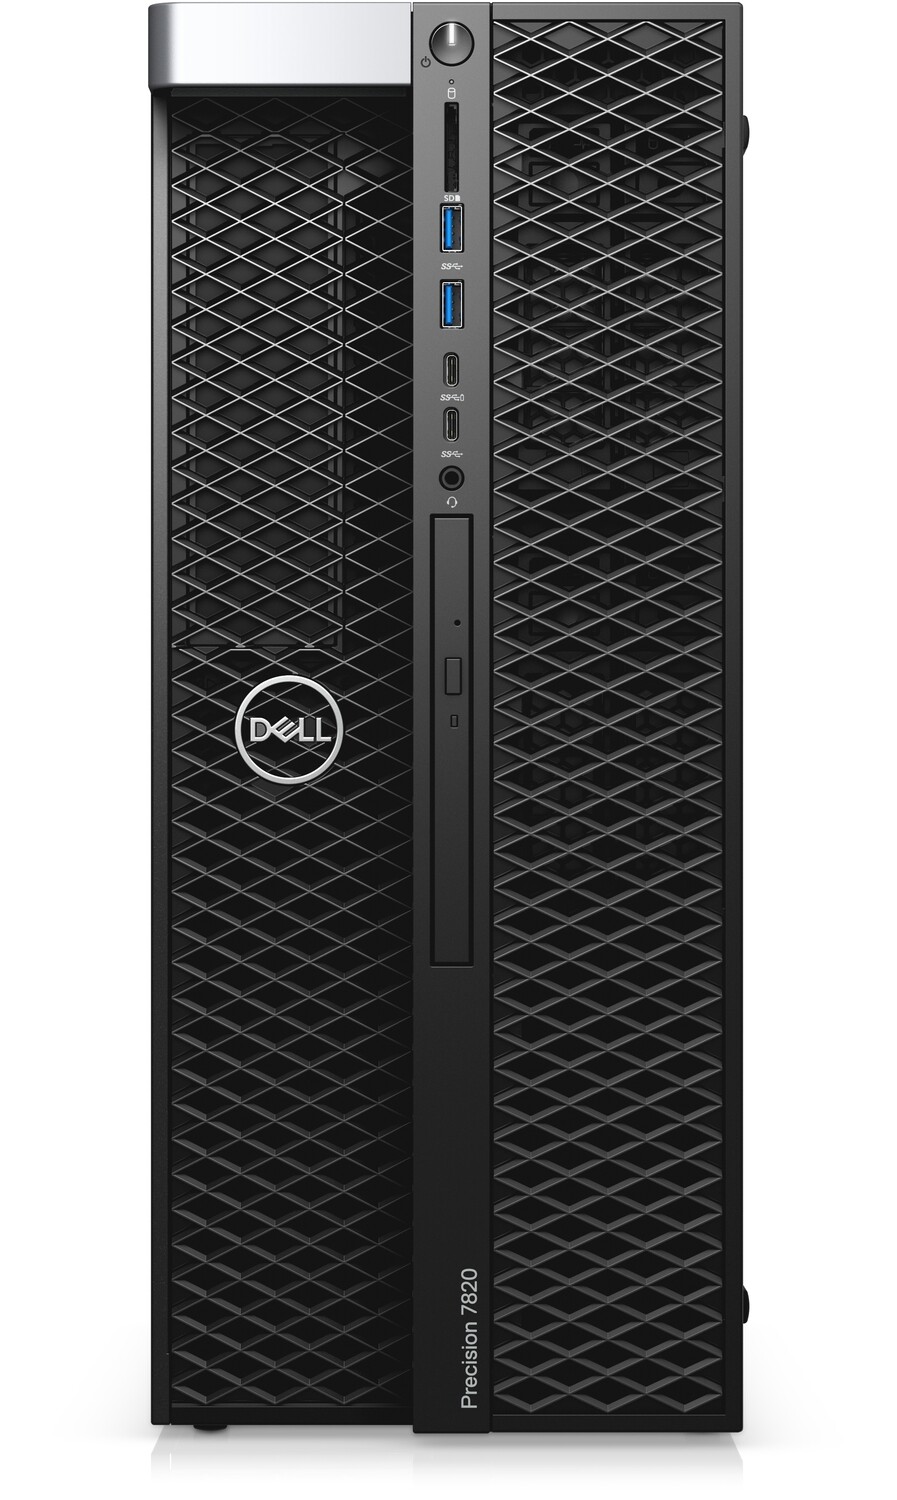 Dell Precision 7820 Tower Dual 8 Core Intel Xeon Bronze 3106 (Total 16 Cores) | 64GB | 500 GB | Quadro 2000 | Windows 10 Pro for Workstations | 210-AMDT